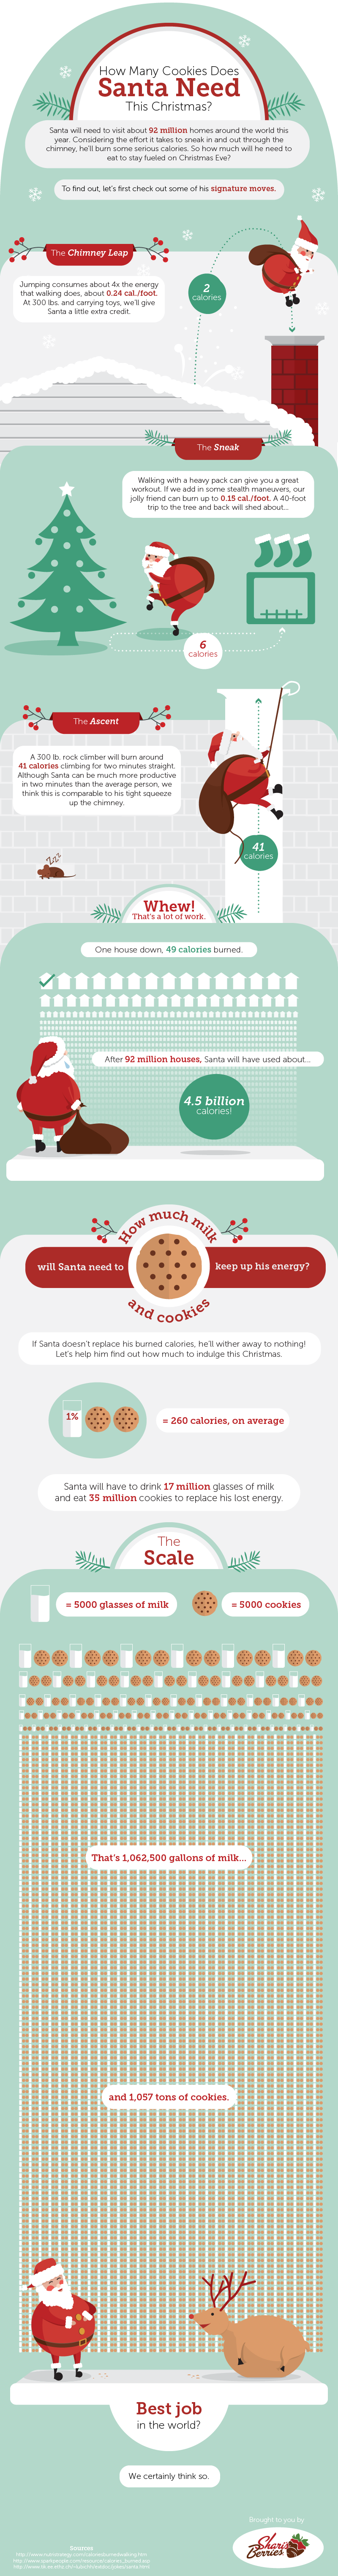 how-many-calories-does-santa-burn